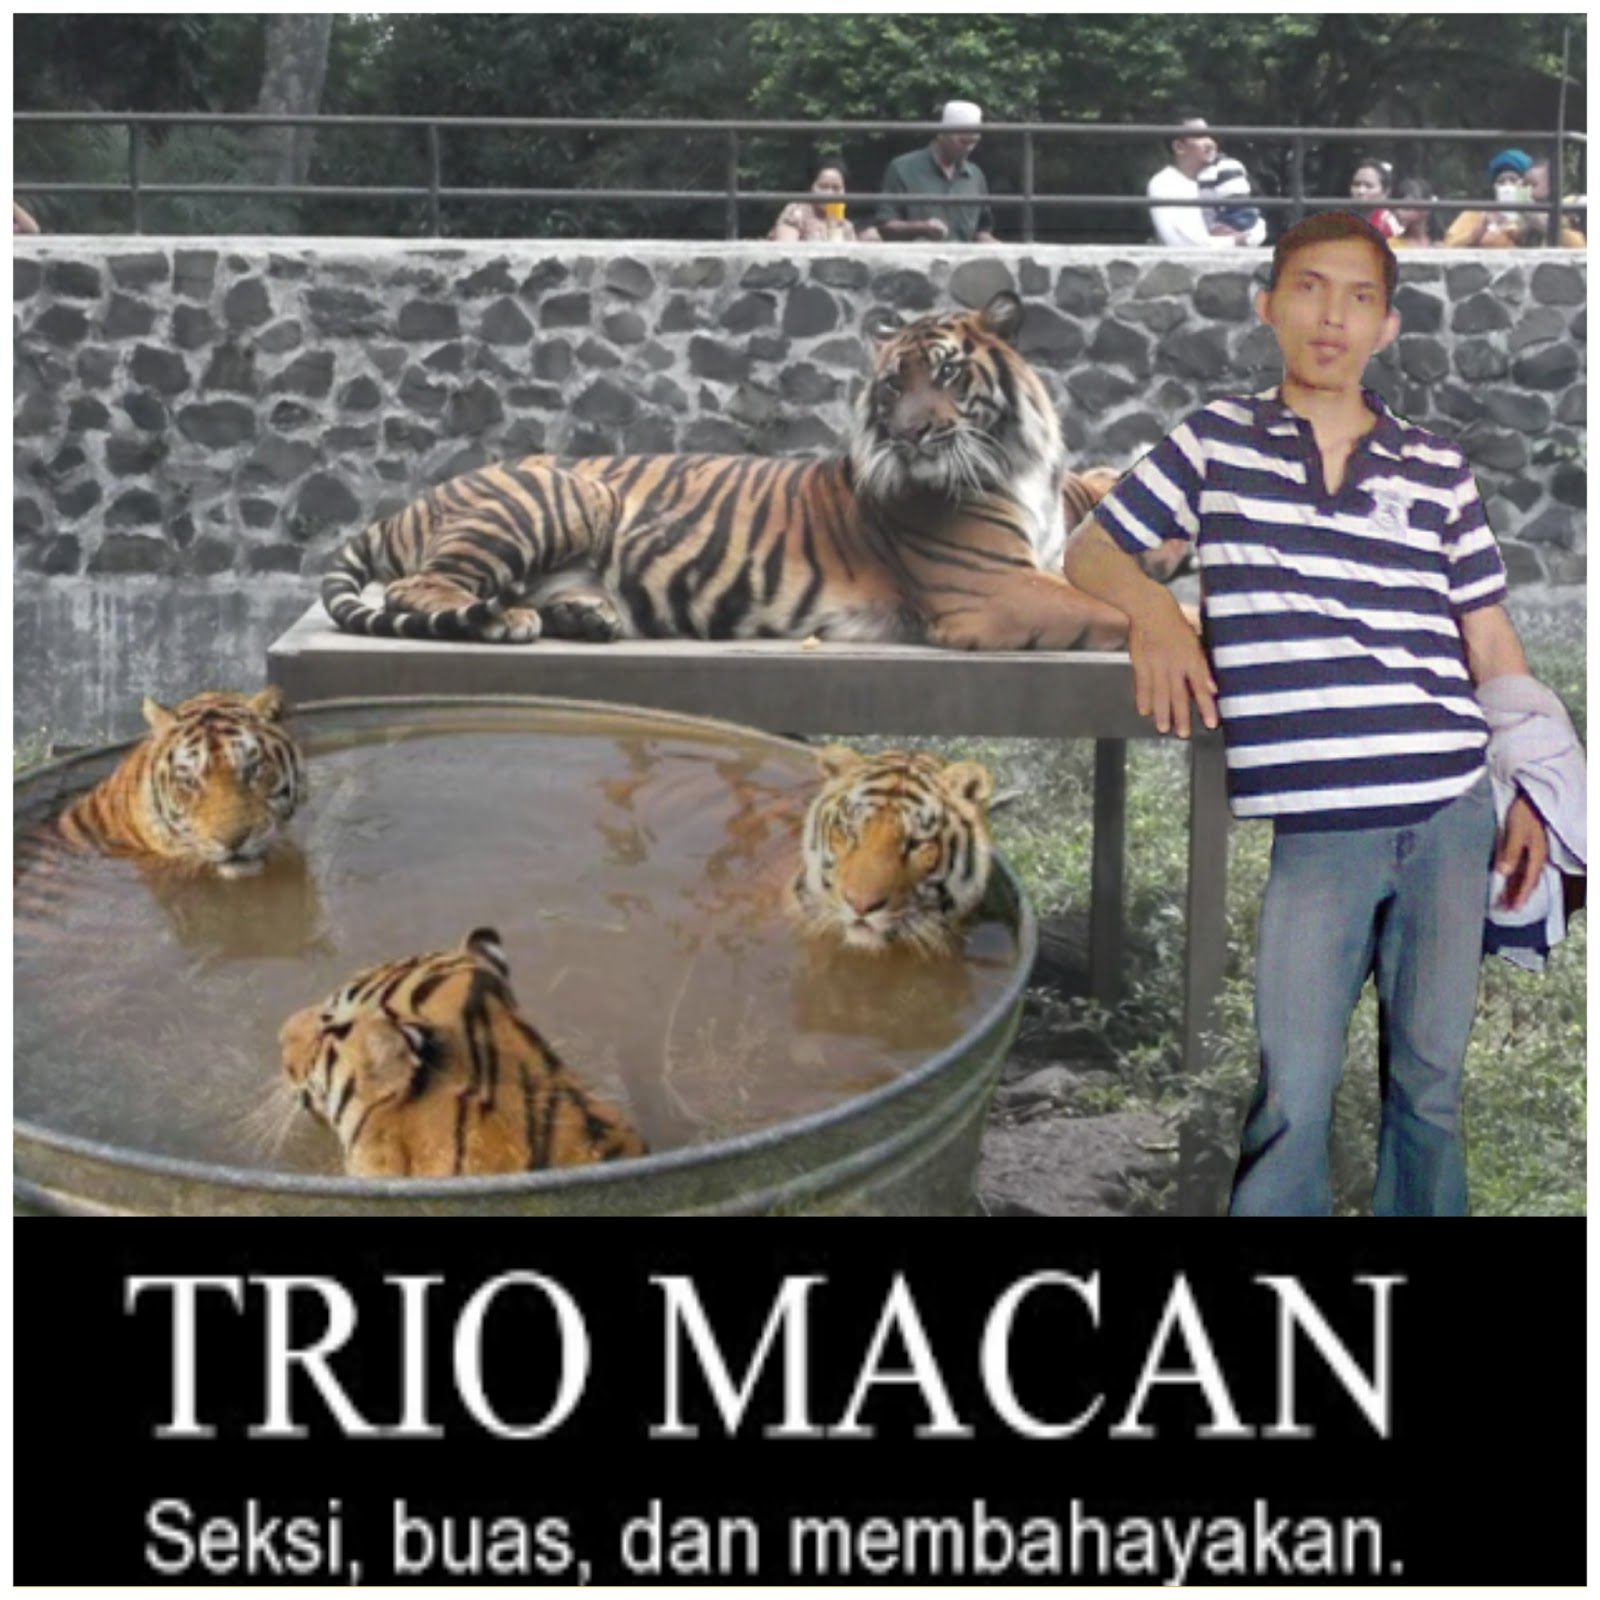 fondos de pantalla kucing anggora persia bergerak,tigre,tigre de bengala,tigre siberiano,fauna silvestre,felidae